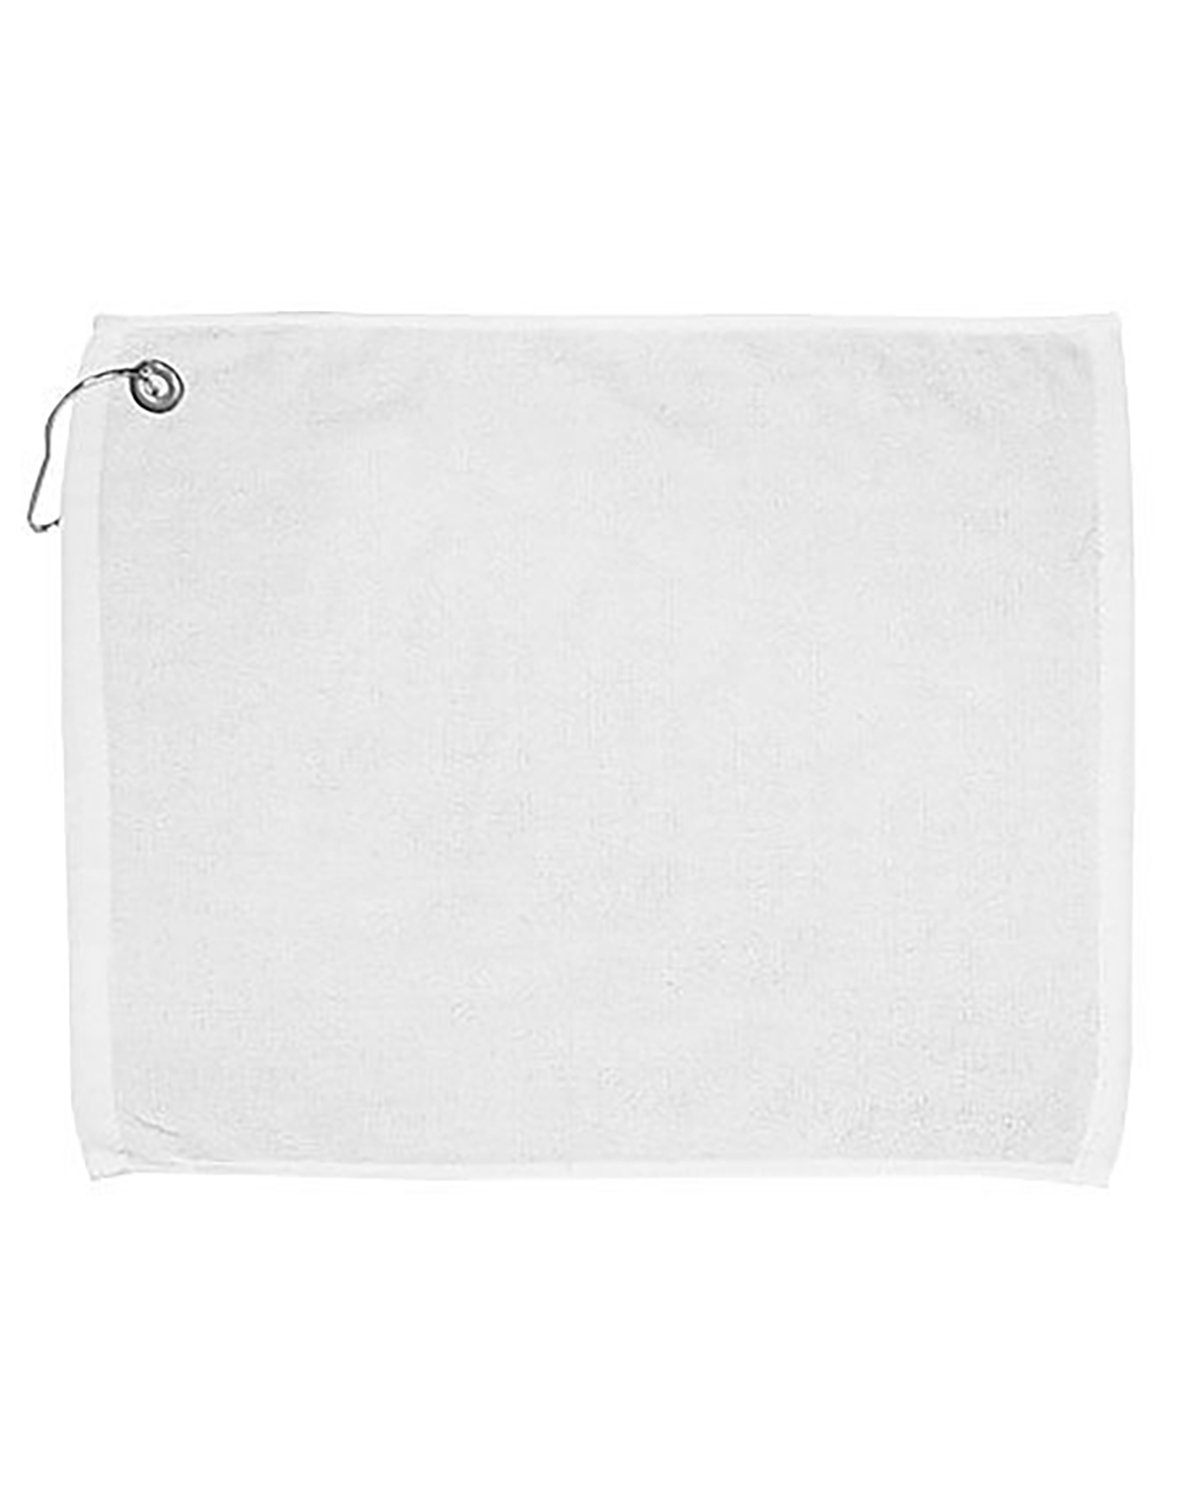 C1625GH-Carmel Towel Company-WHITE-Carmel Towel Company-Bags and Accessories-1